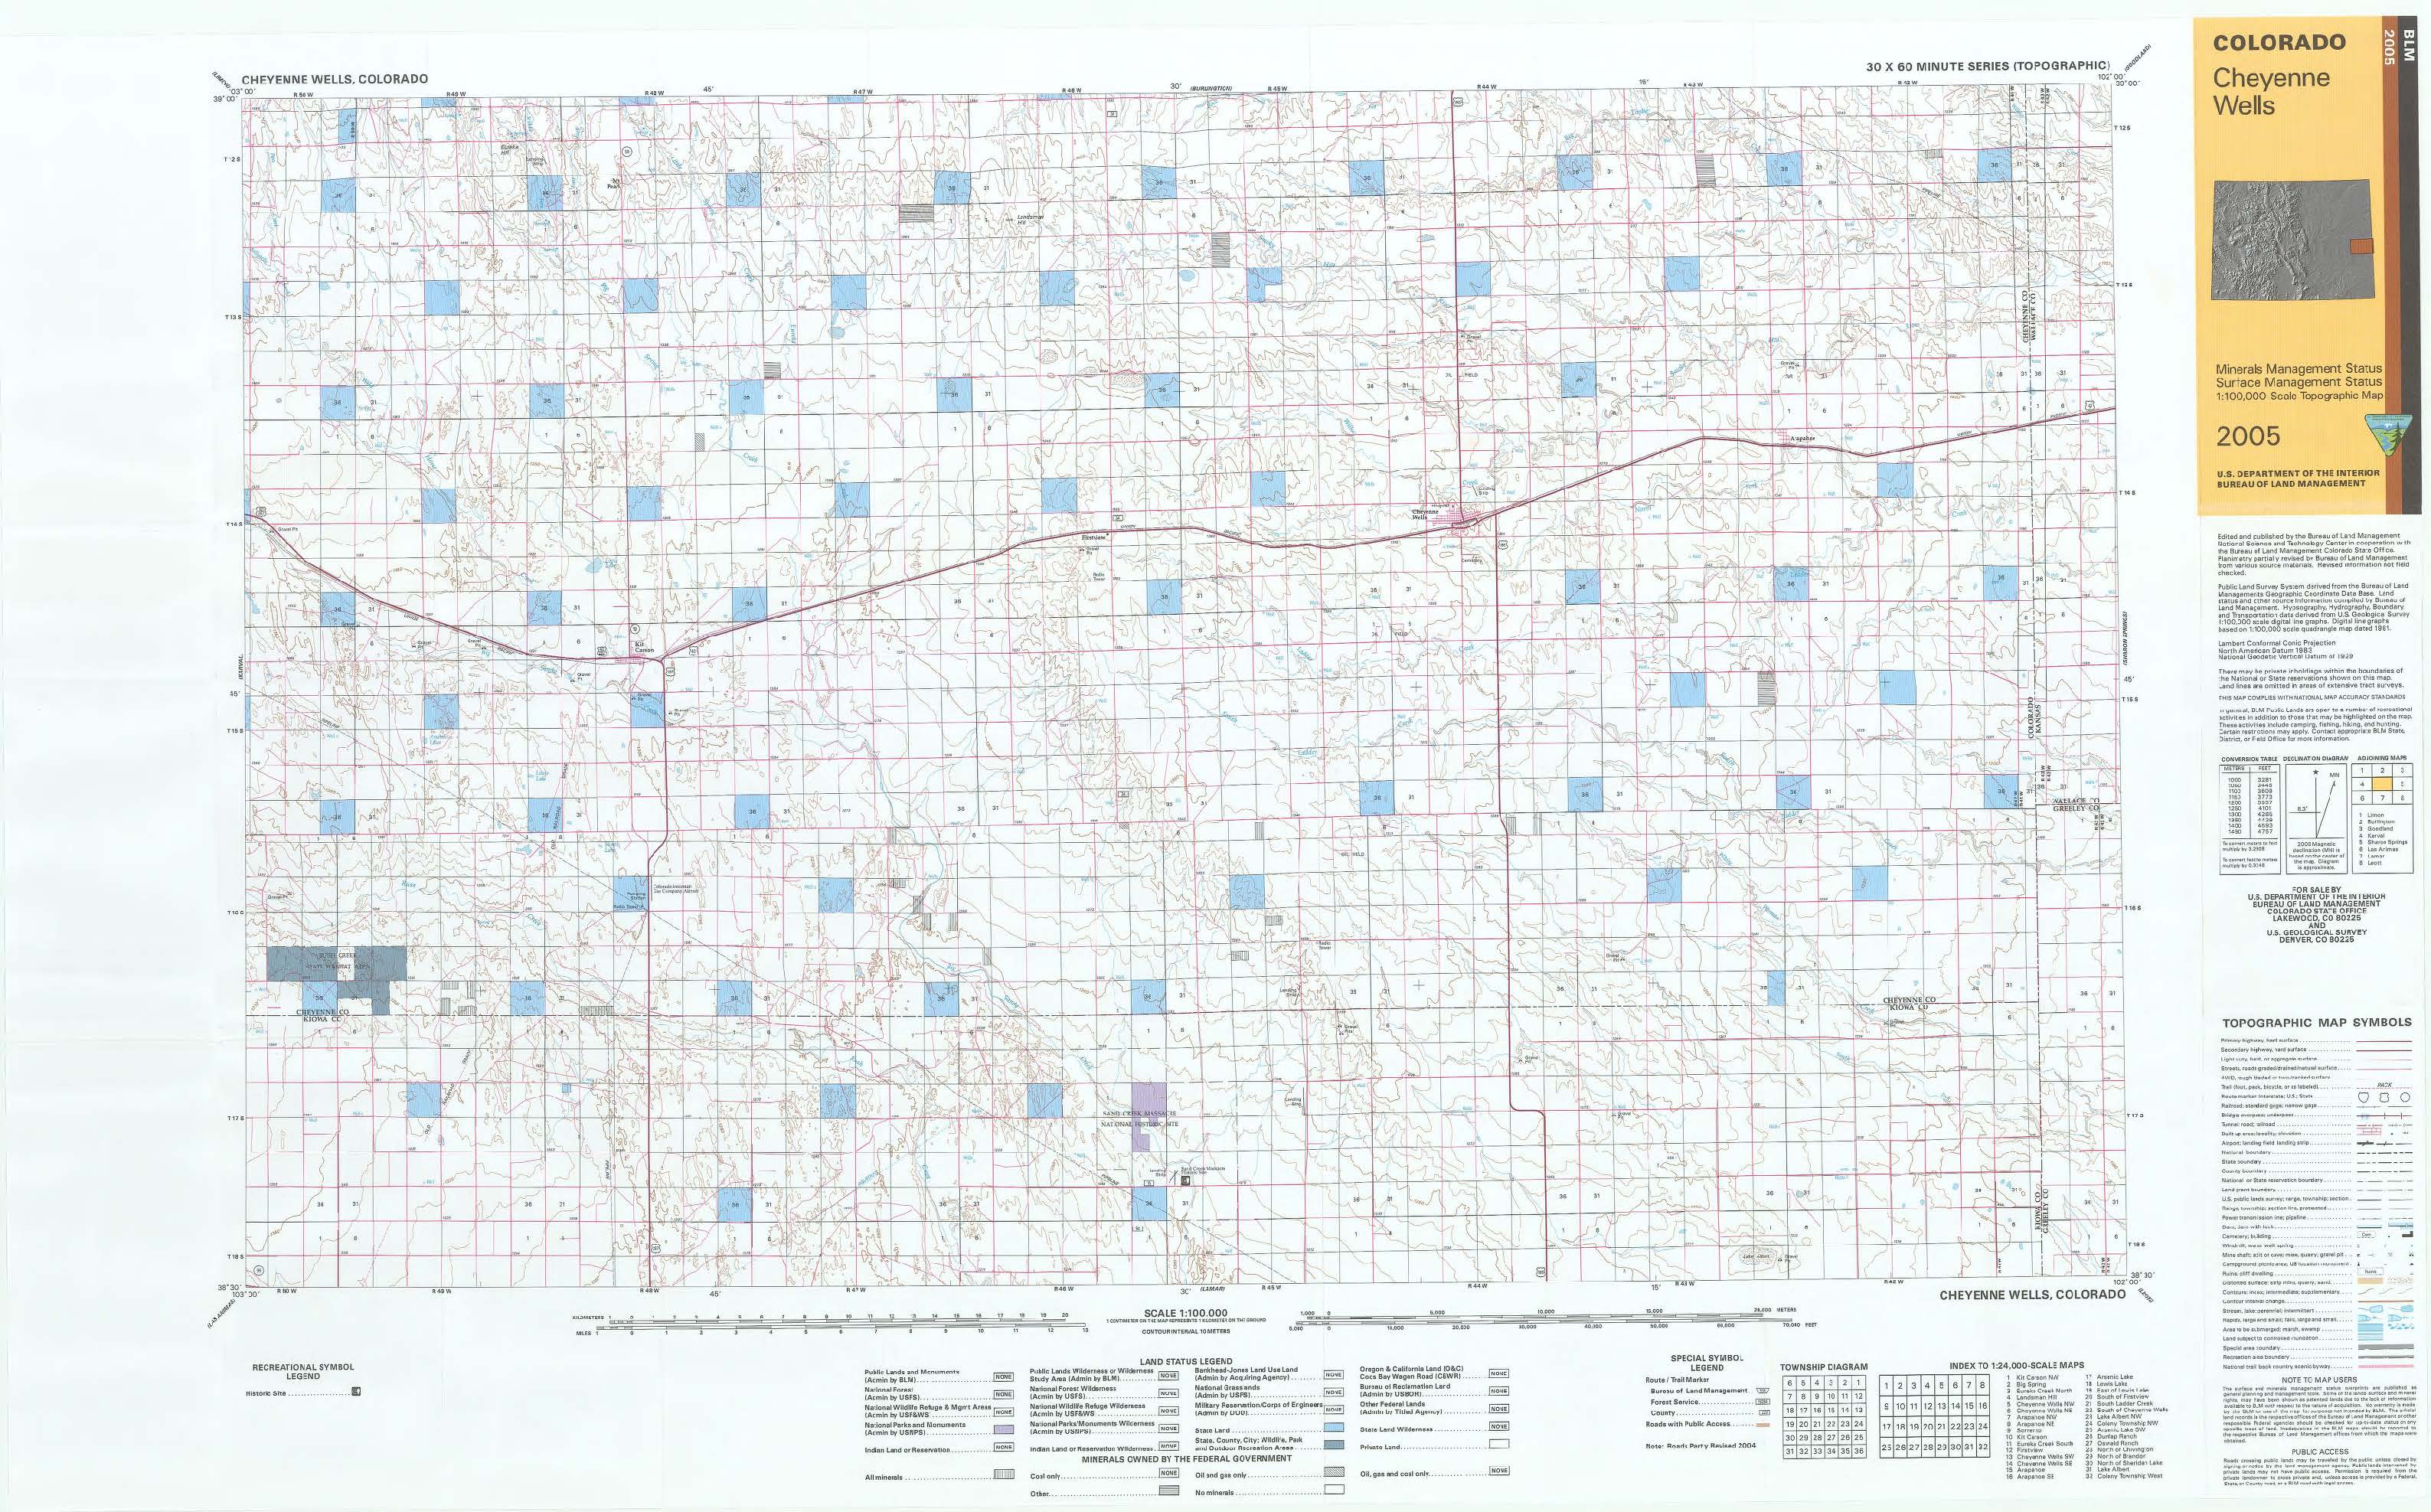 Co Surface Management Status Cheyenne Wells Map Bureau Of Land Management